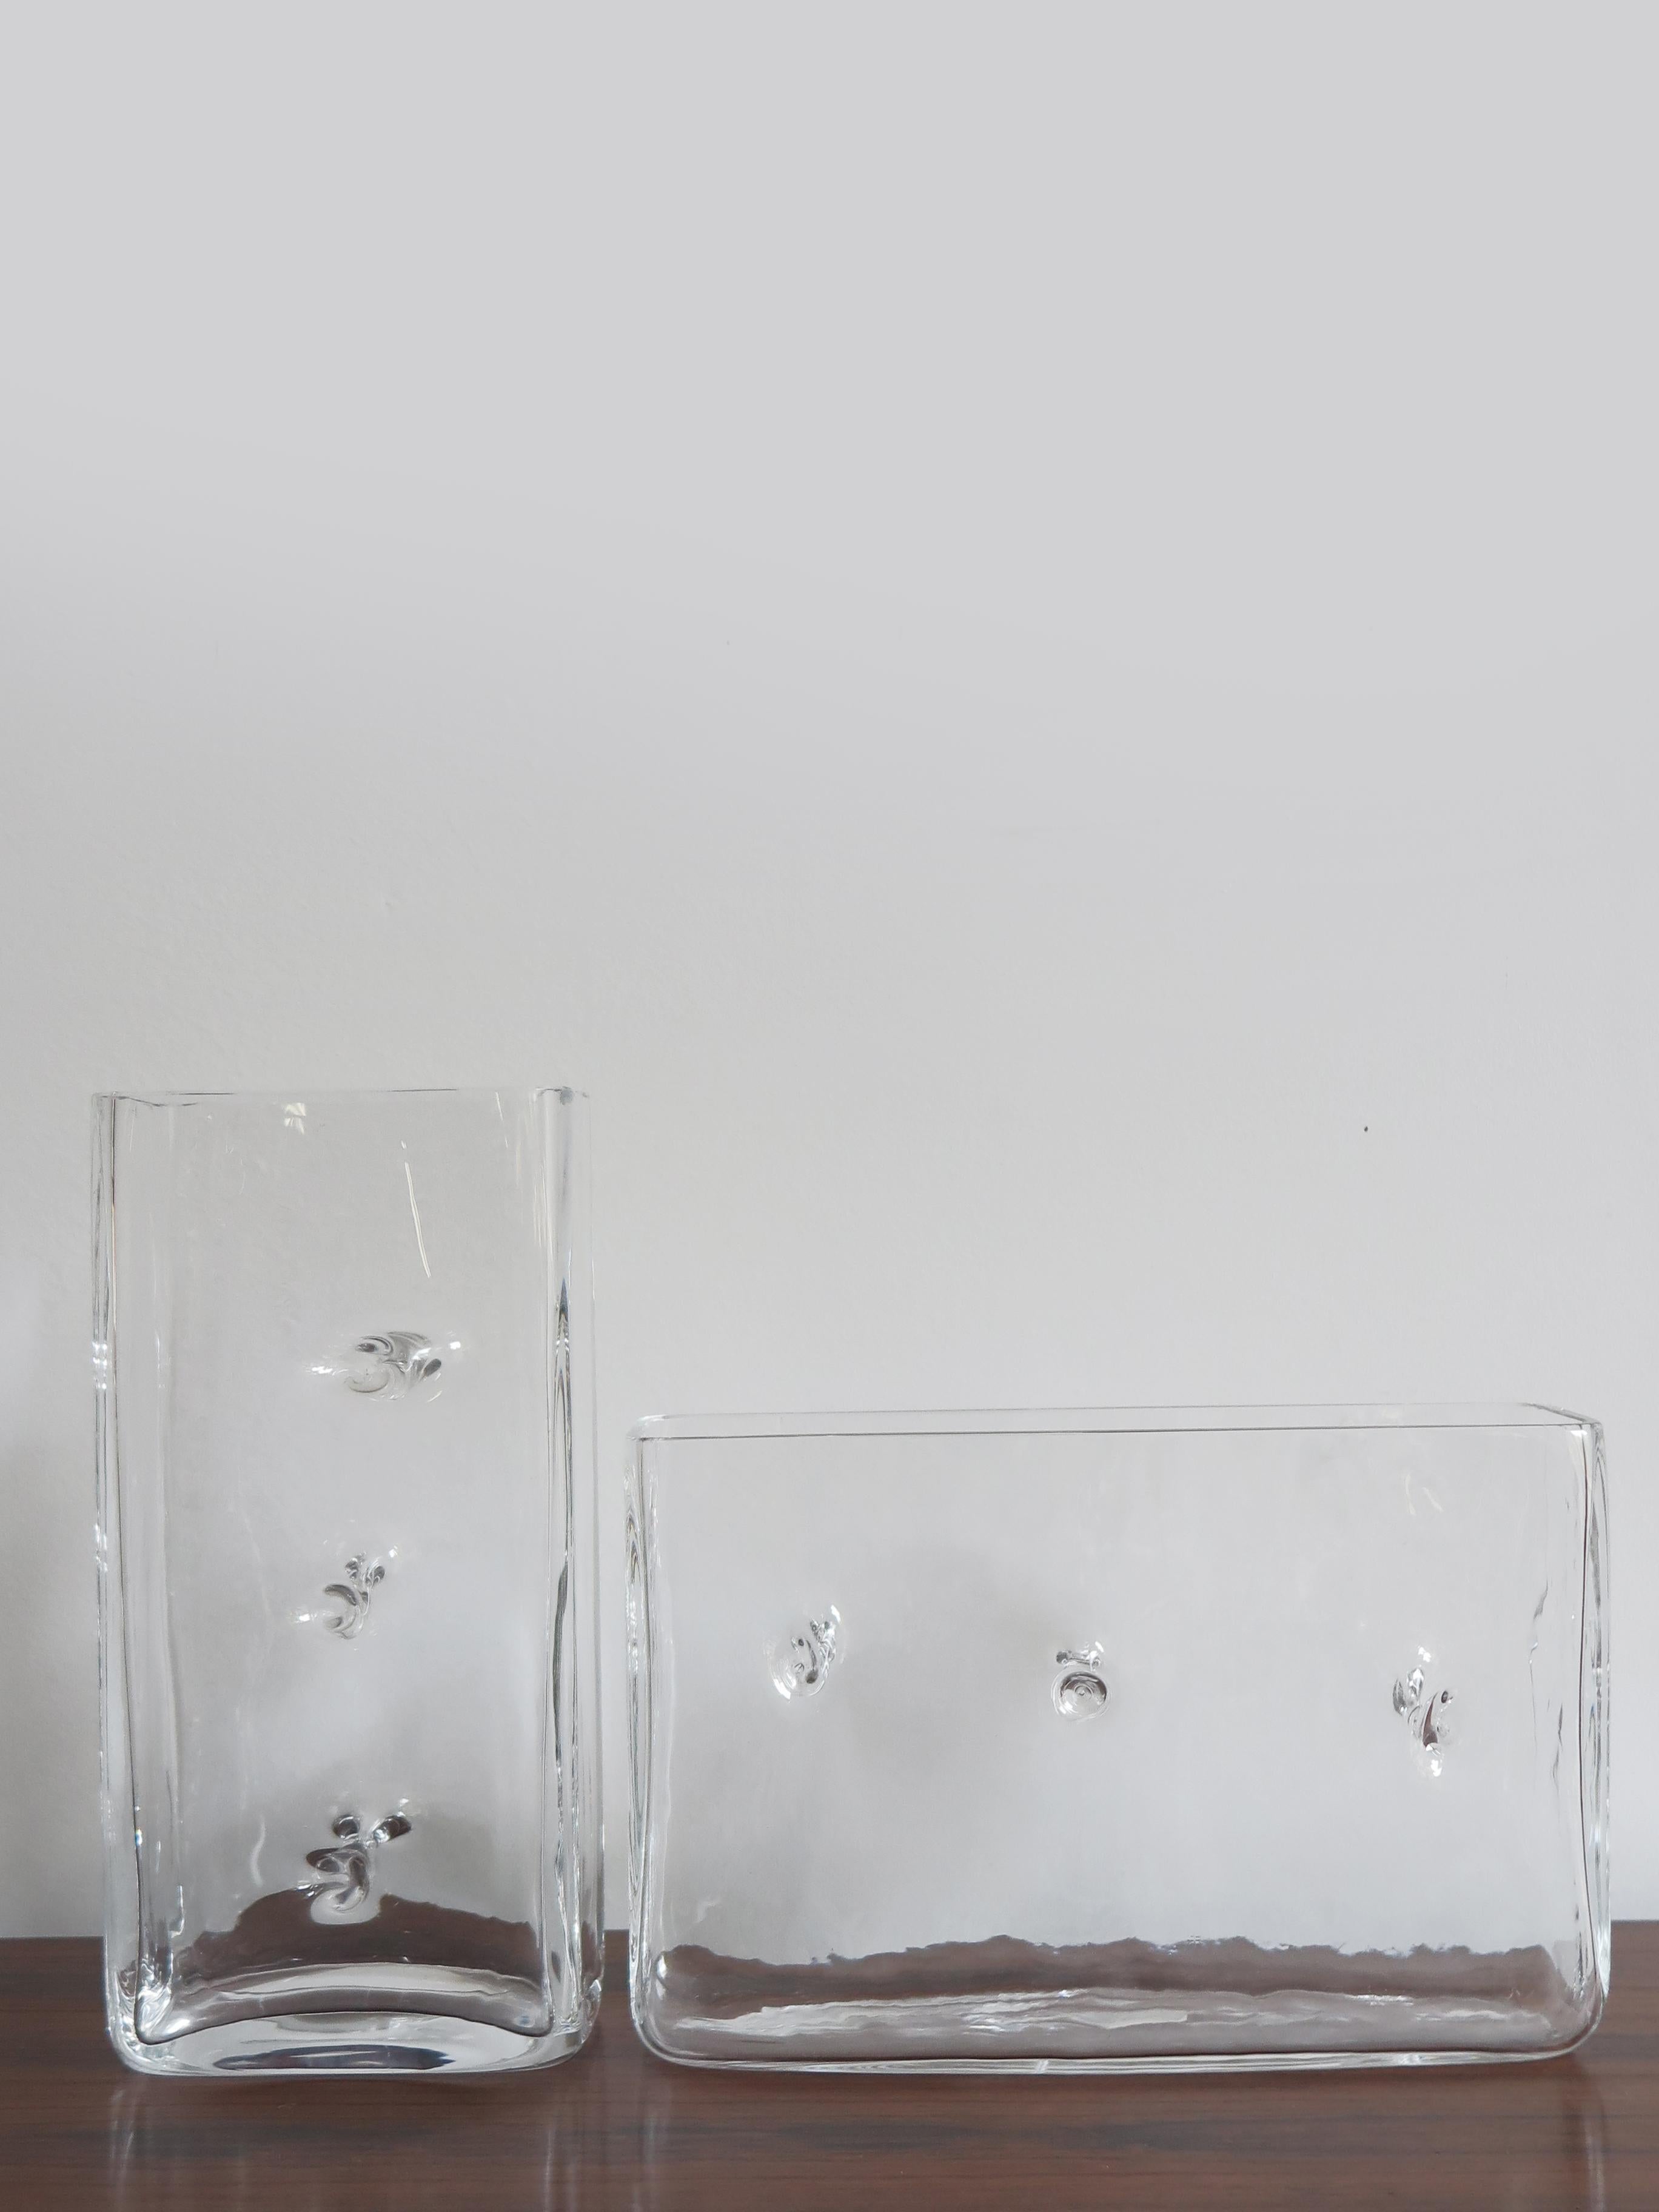 Set of two Italian midcentury Murano glass vases model Repetai designed by Italian artist Toso Renato for Fratelli Toso in 1964

Publications:
Gold Medal at the XXXIV Venice International Art Biennale
Il Vetro di Murano alle Biennali 1985 - 1972